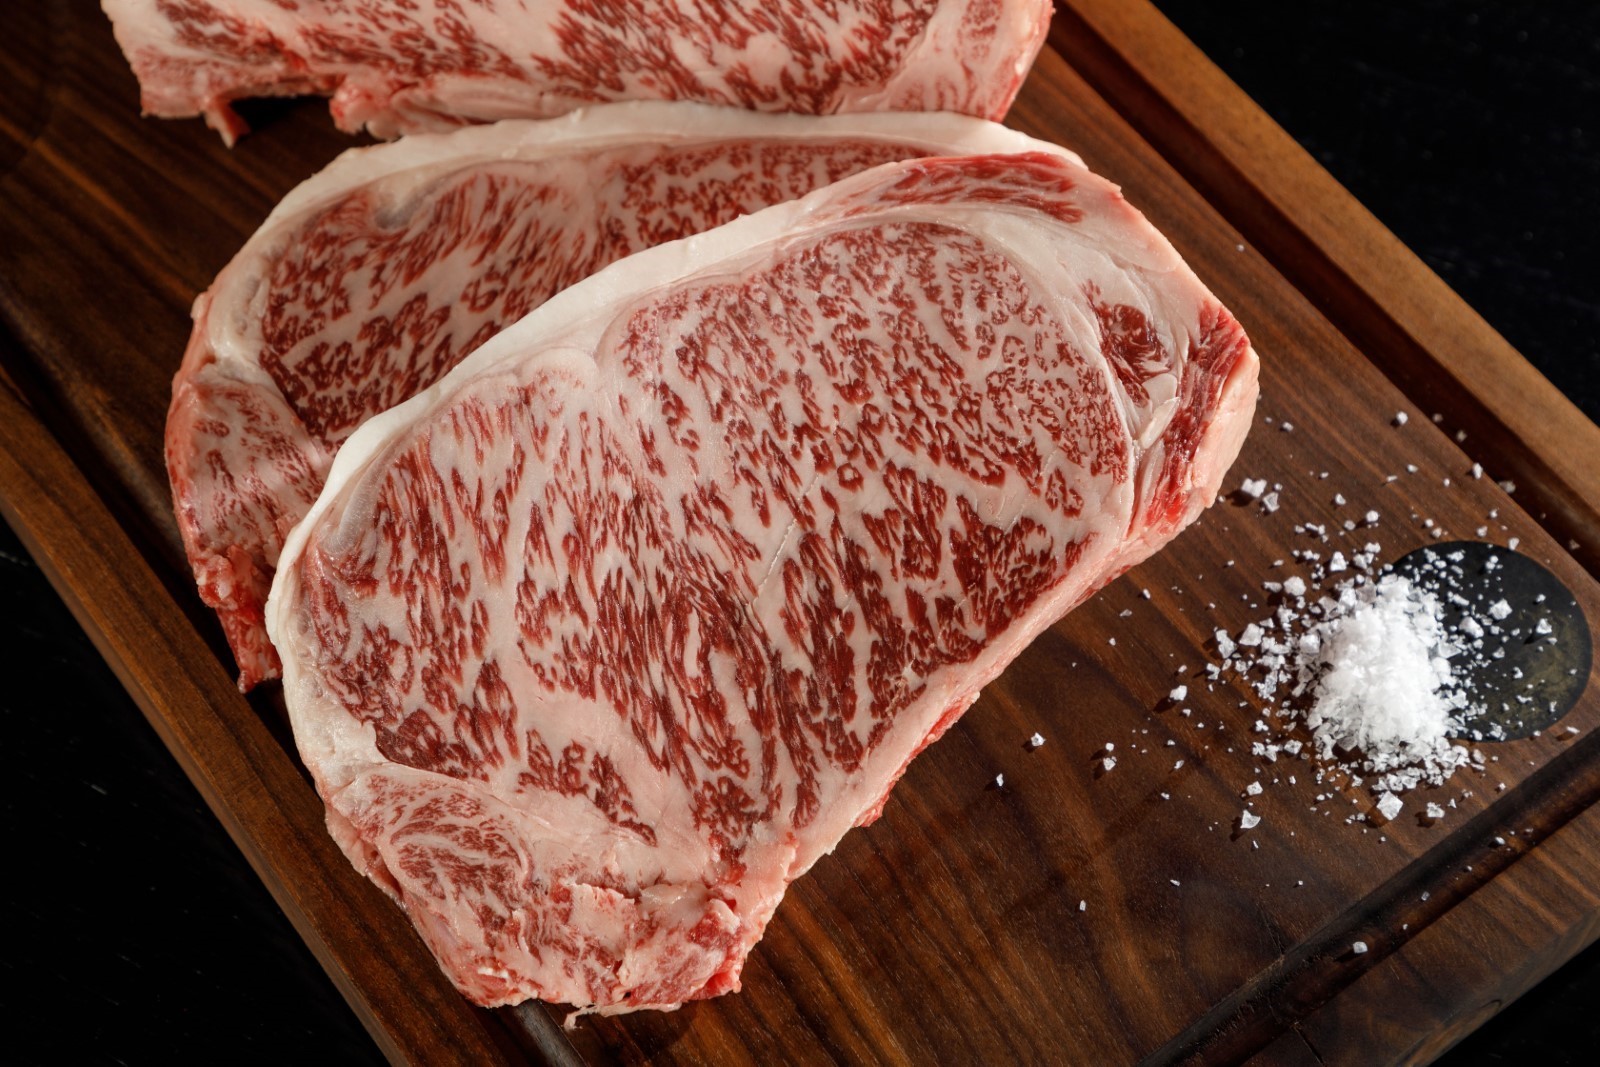 https://www.foodmanufacture.co.uk/var/wrbm_gb_food_pharma/storage/images/publications/food-beverage-nutrition/foodmanufacture.co.uk/expertise/npd/japanese-wagyu-crowned-world-s-best-steak/15805479-1-eng-GB/Japanese-Wagyu-crowned-world-s-best-steak.jpg